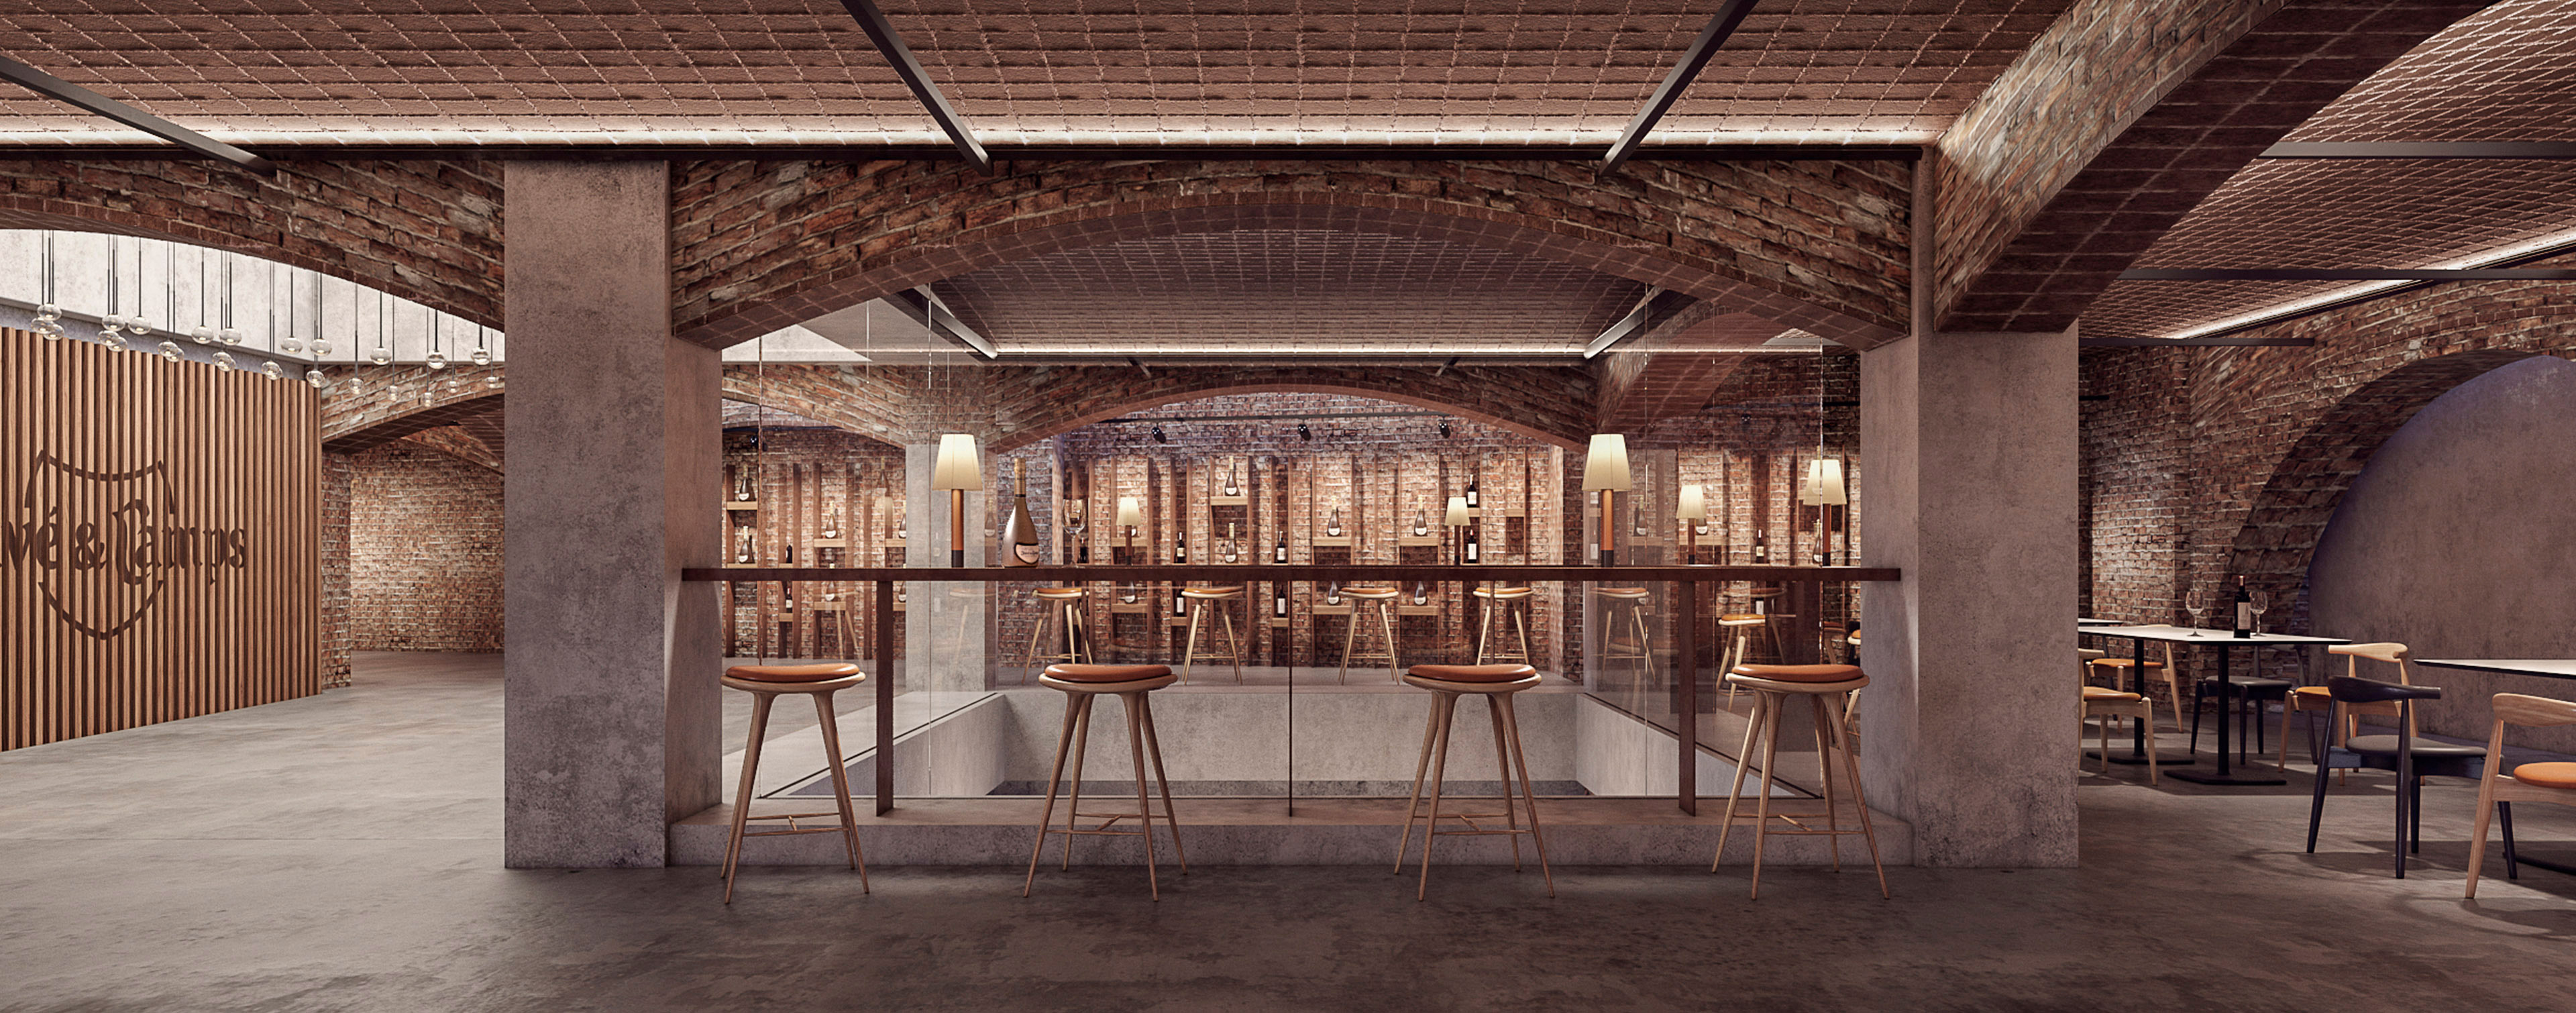 luv studio luxury architects santsadurni juve y camps winery IMG 02 - LUV Studio - Arquitectura y diseño - Barcelona